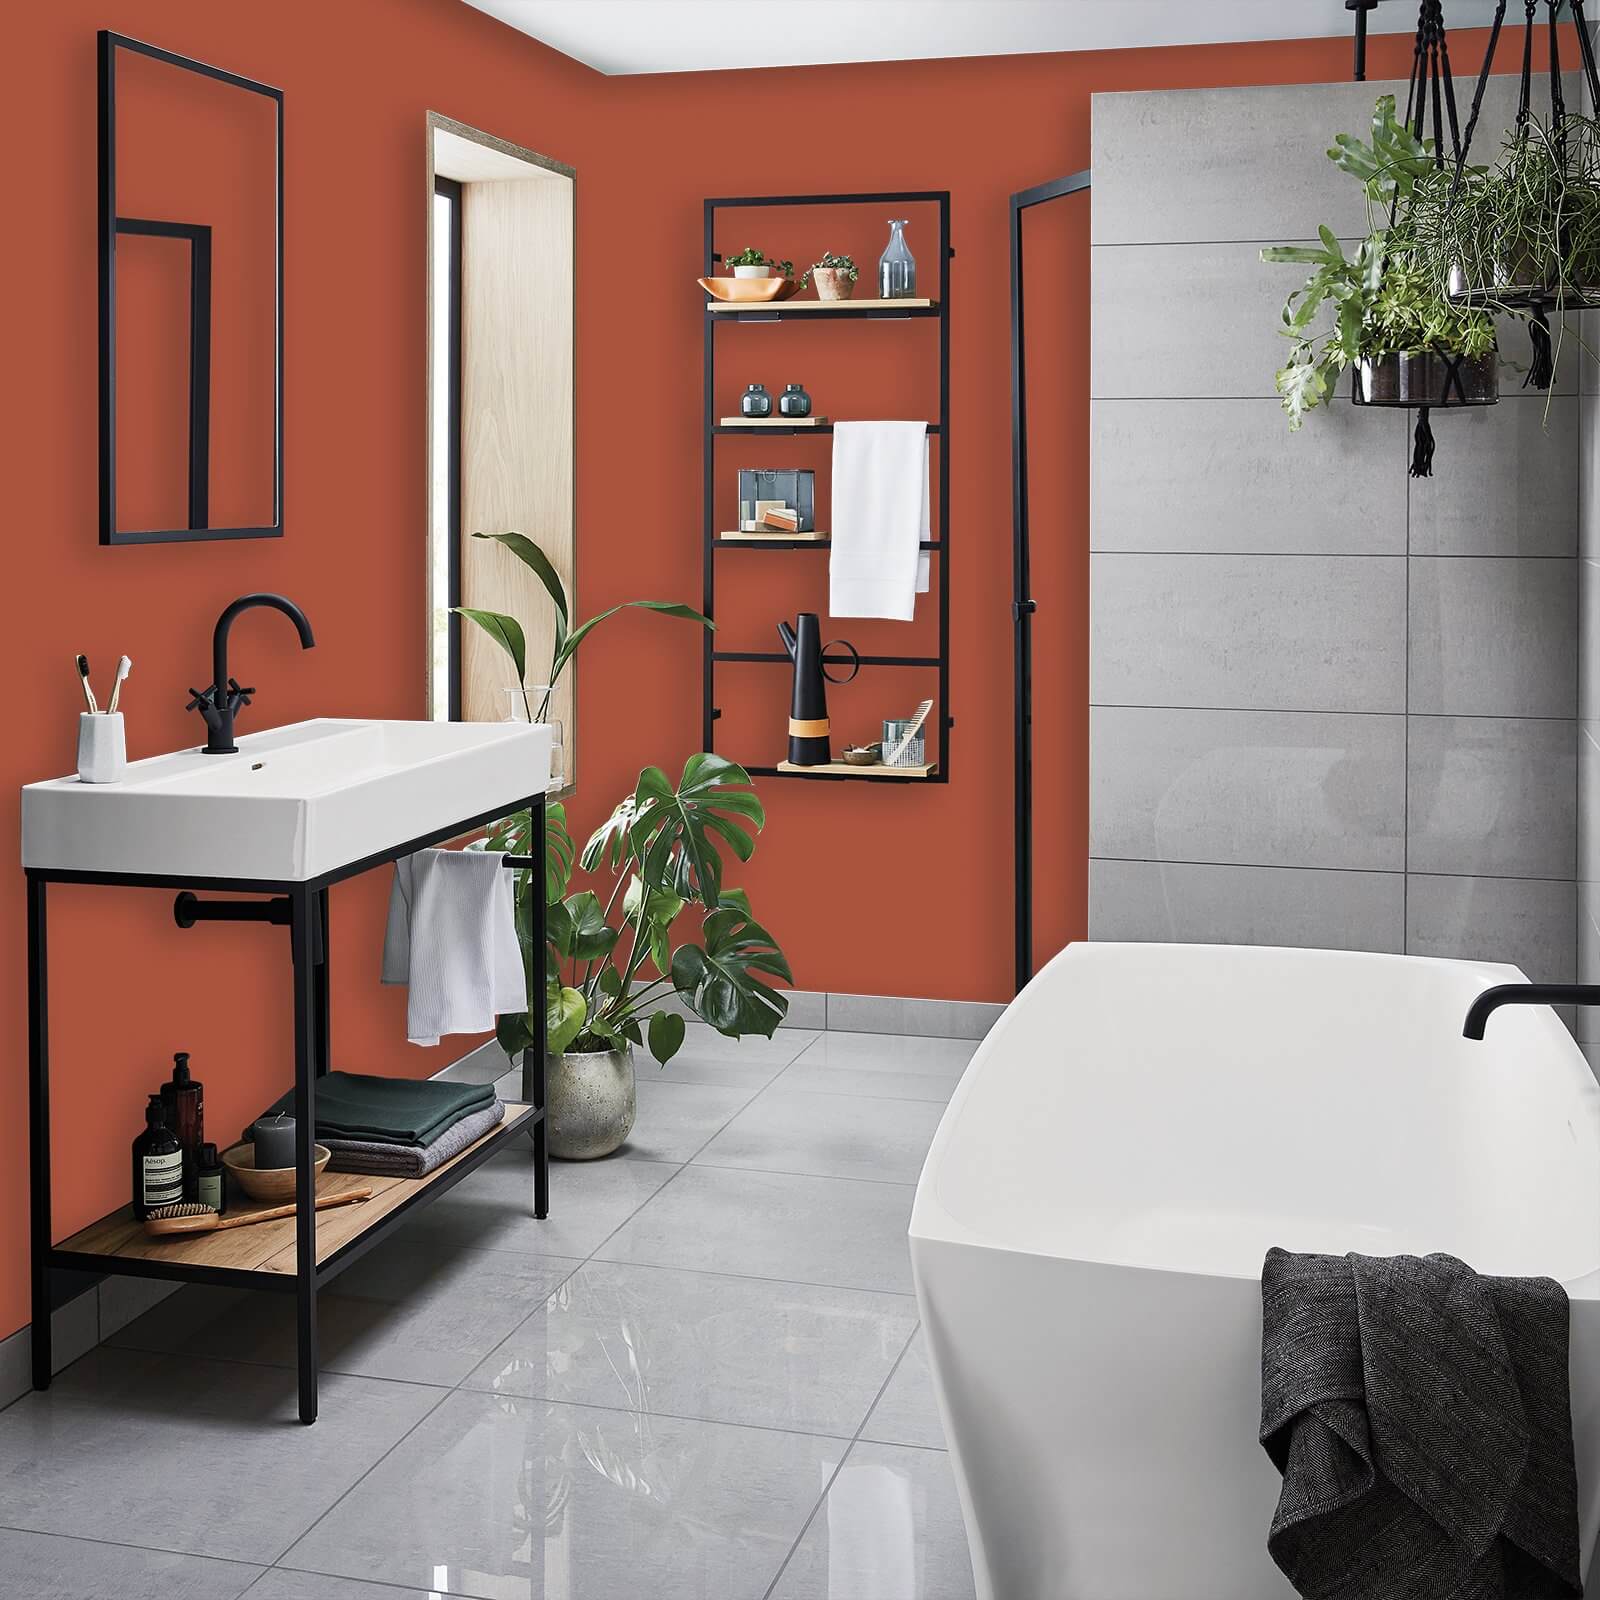 Homebase Bathroom Mid Sheen Paint - Orange Glow 2.5L